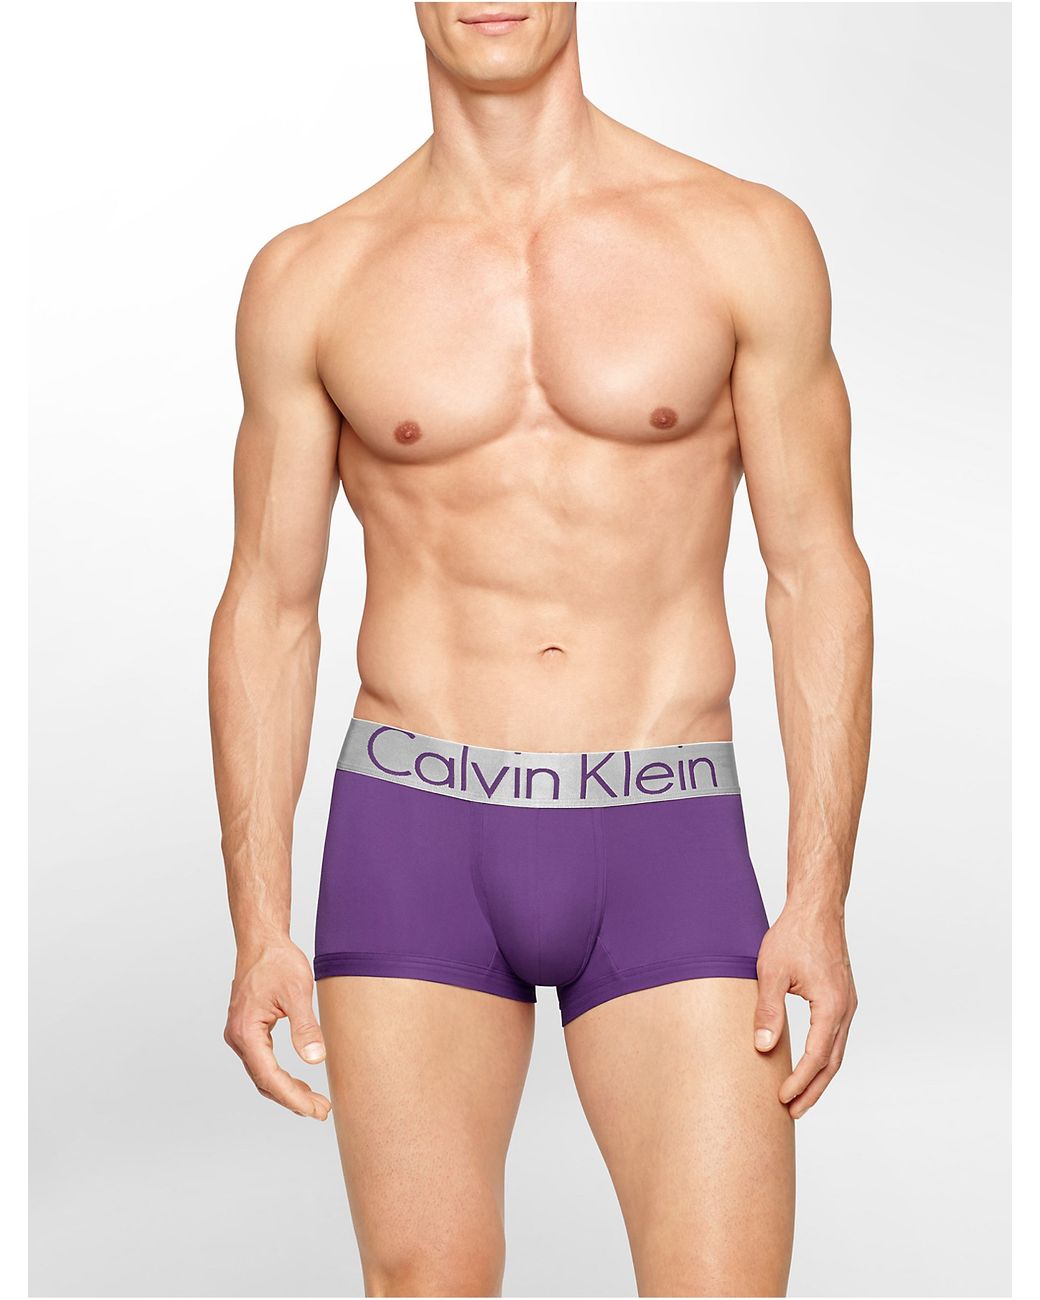 Actualizar 86+ imagen calvin klein purple boxers